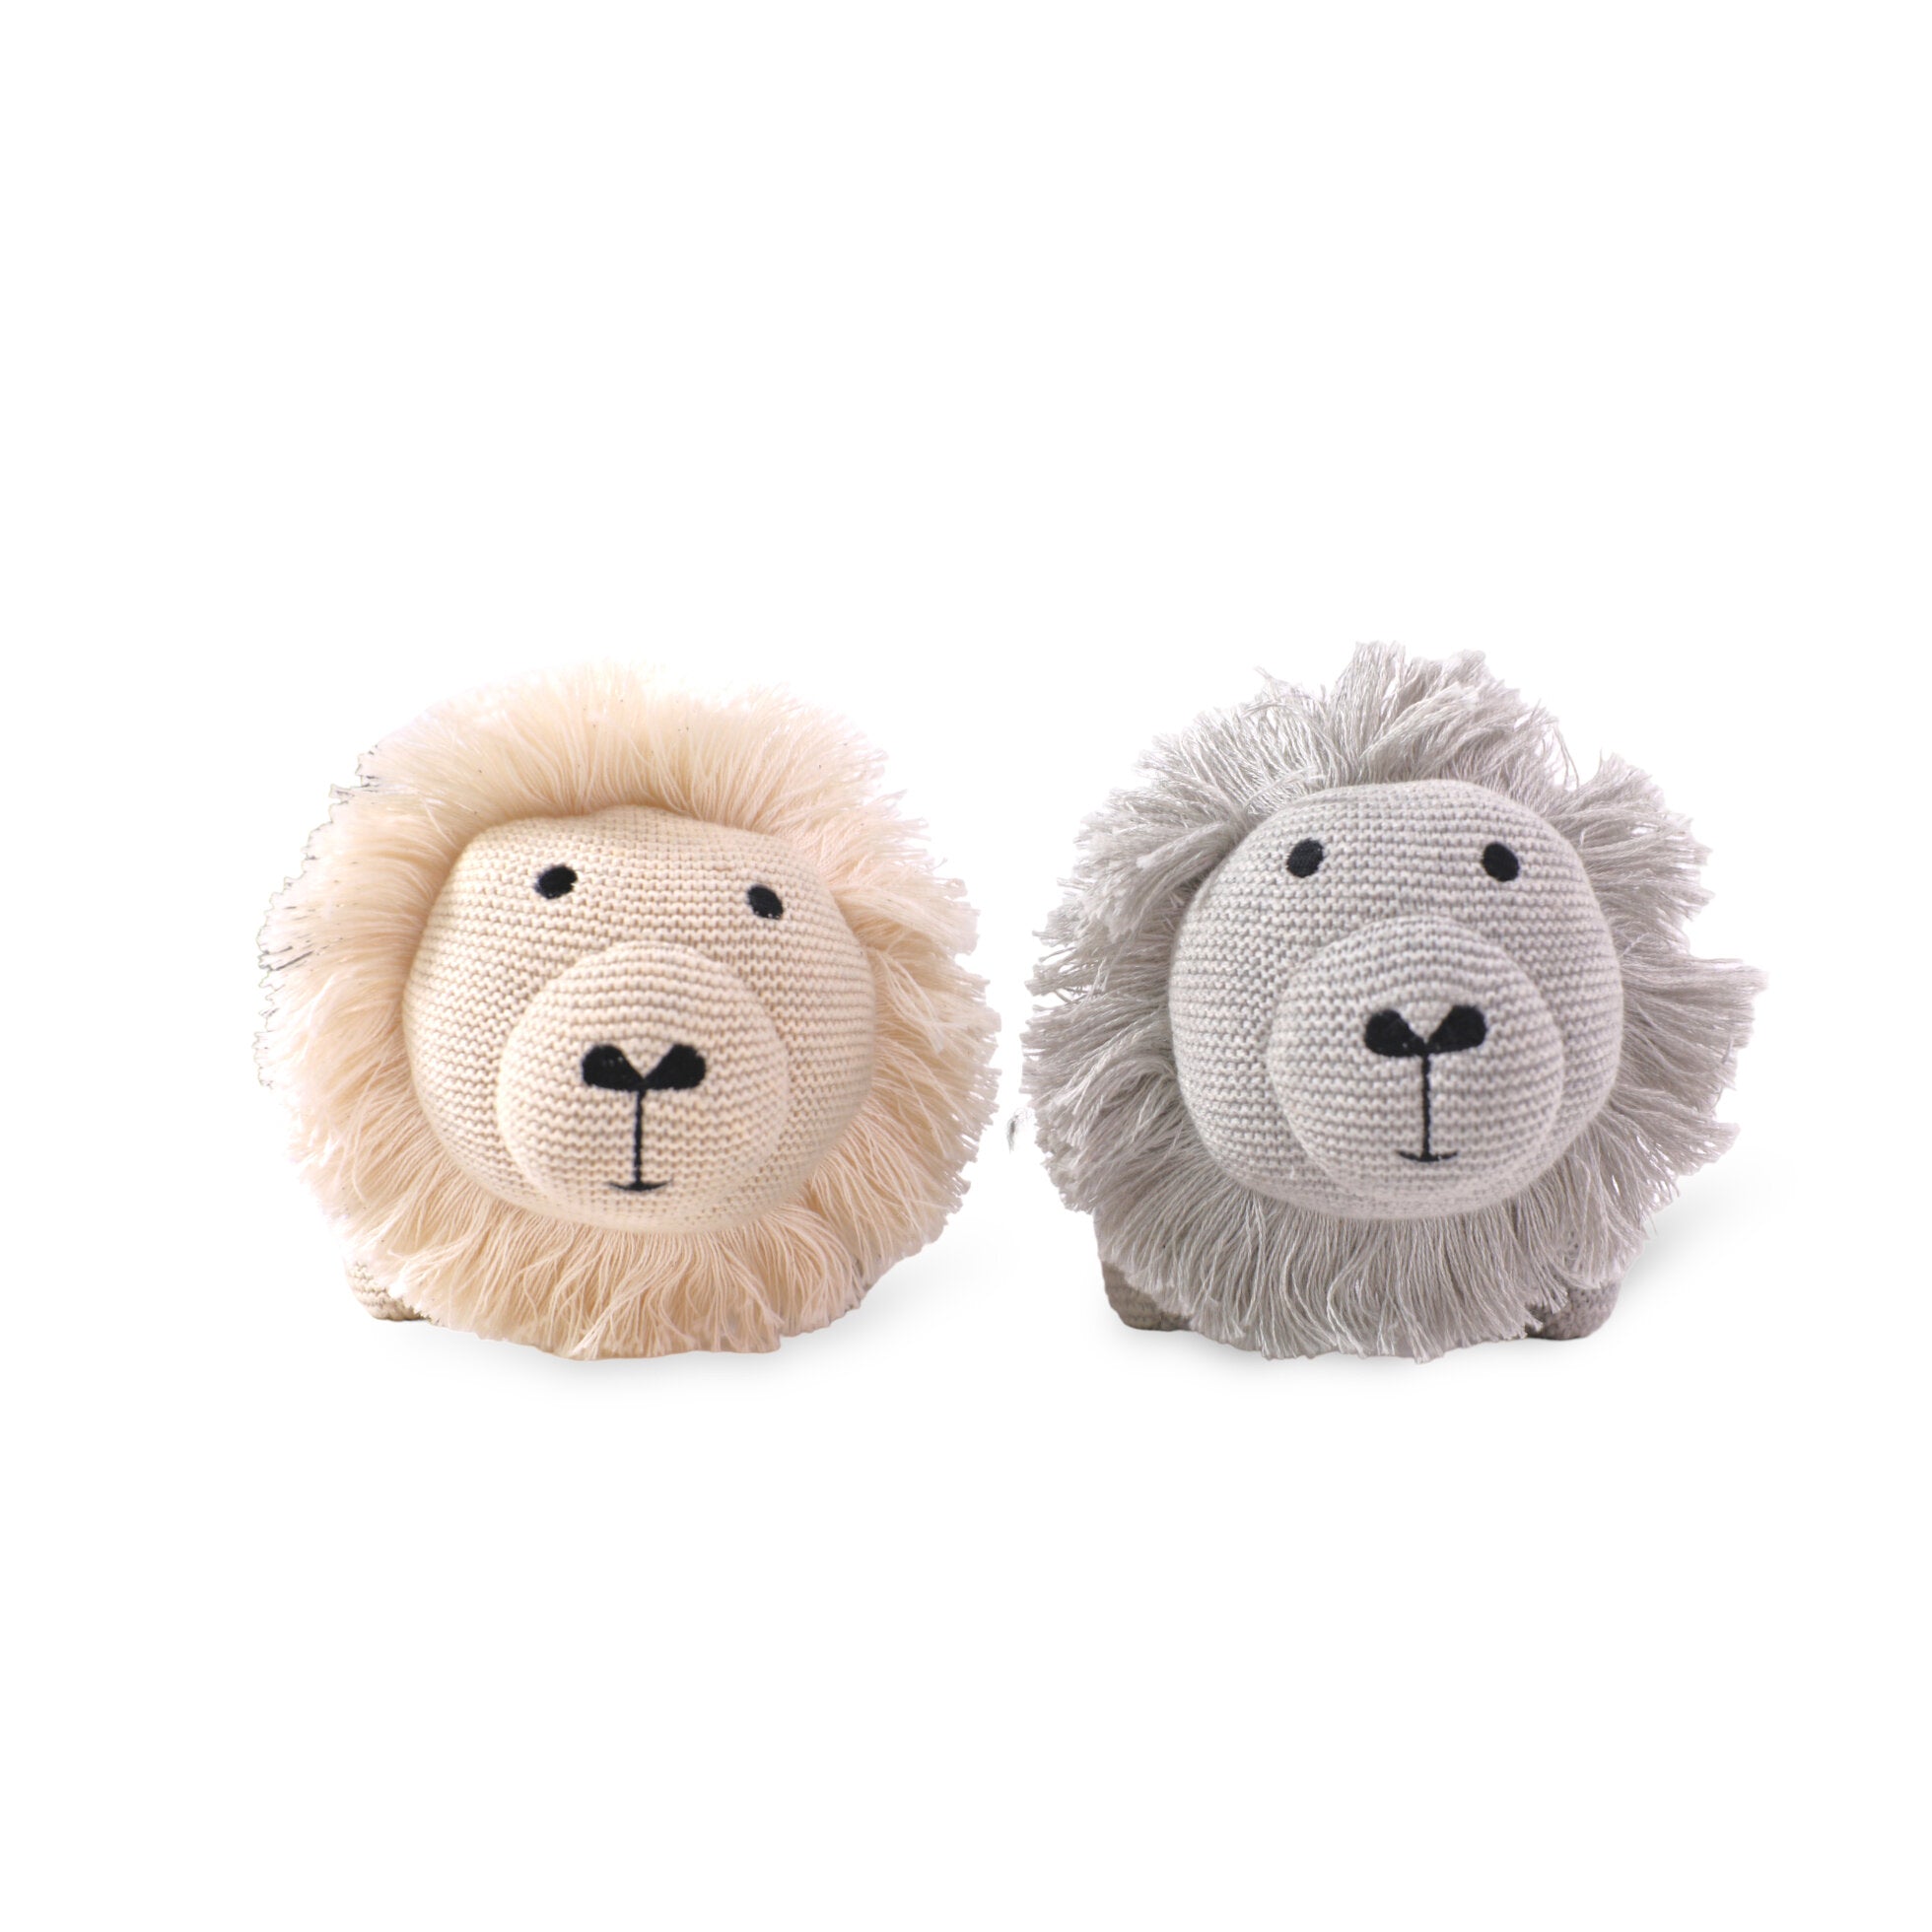 Lion Knit Stuffed Animal Toy (Organic Cotton) by Viverano Organics